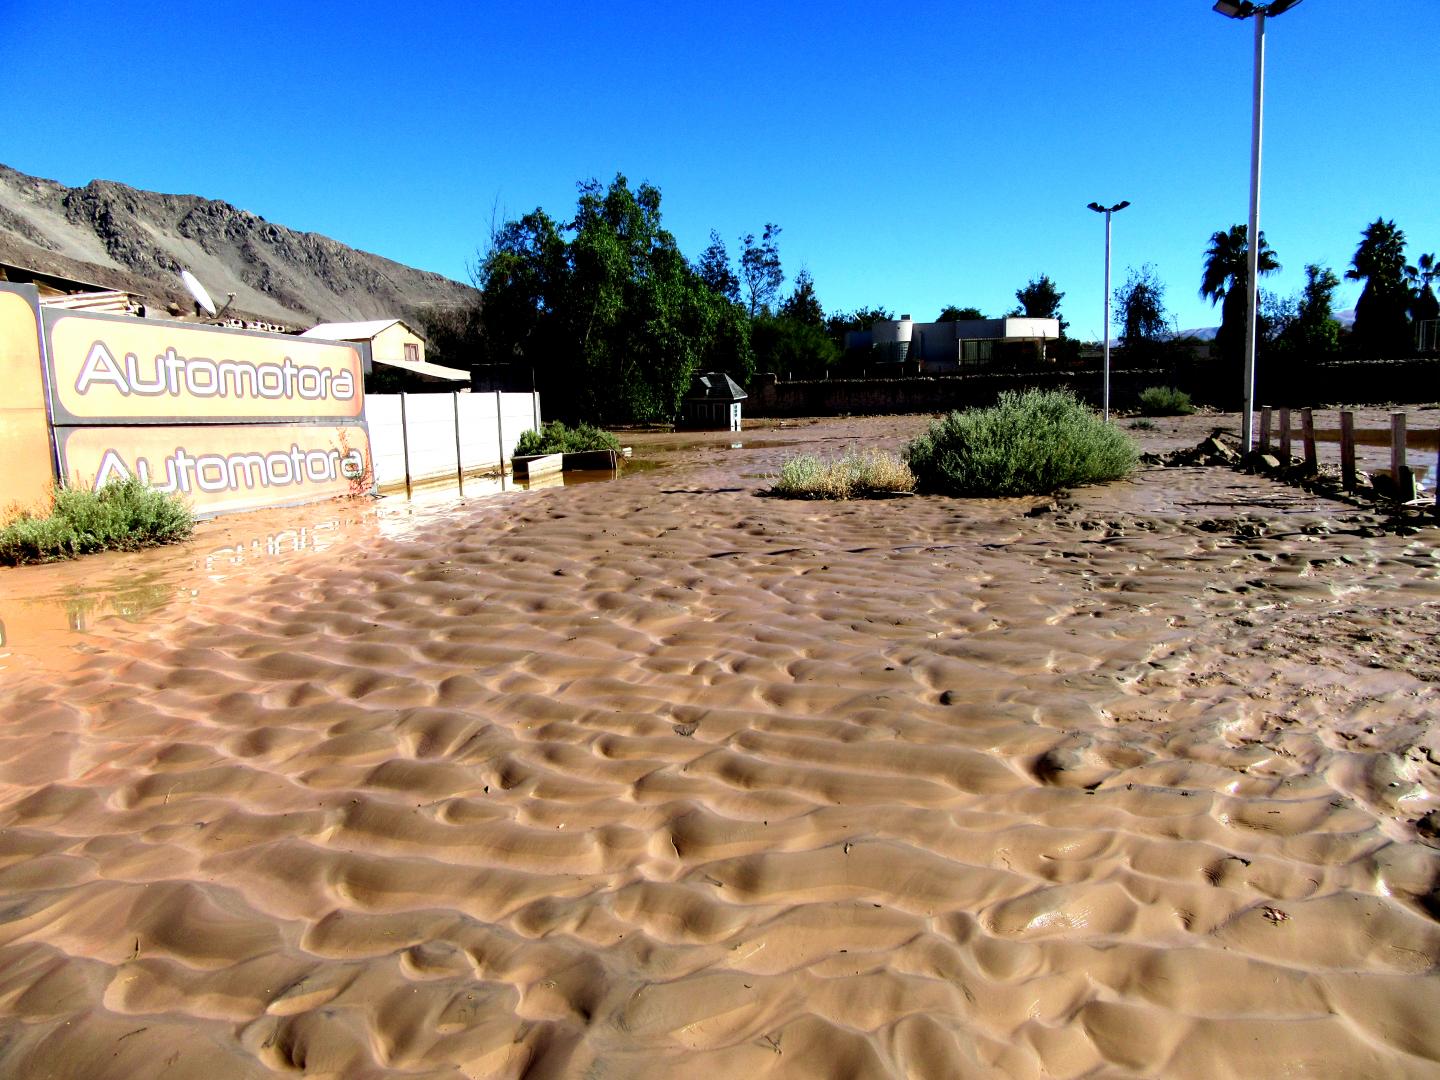 Sedimentary record of catastrophic floods in the Atacama Desert